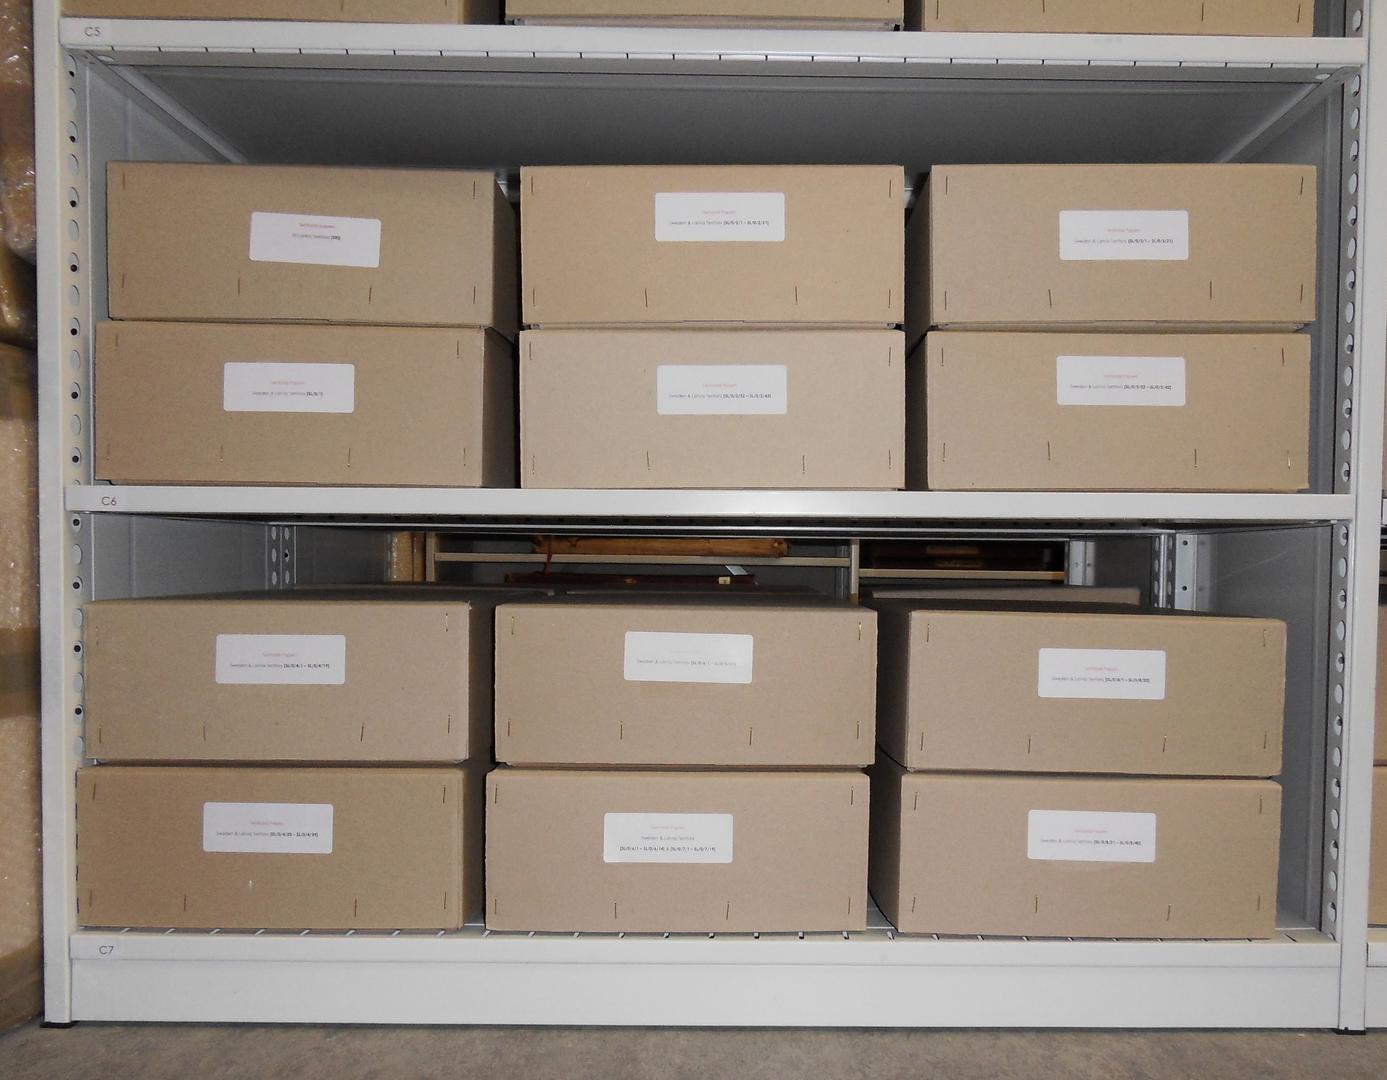 Nineteen boxes of correspondence